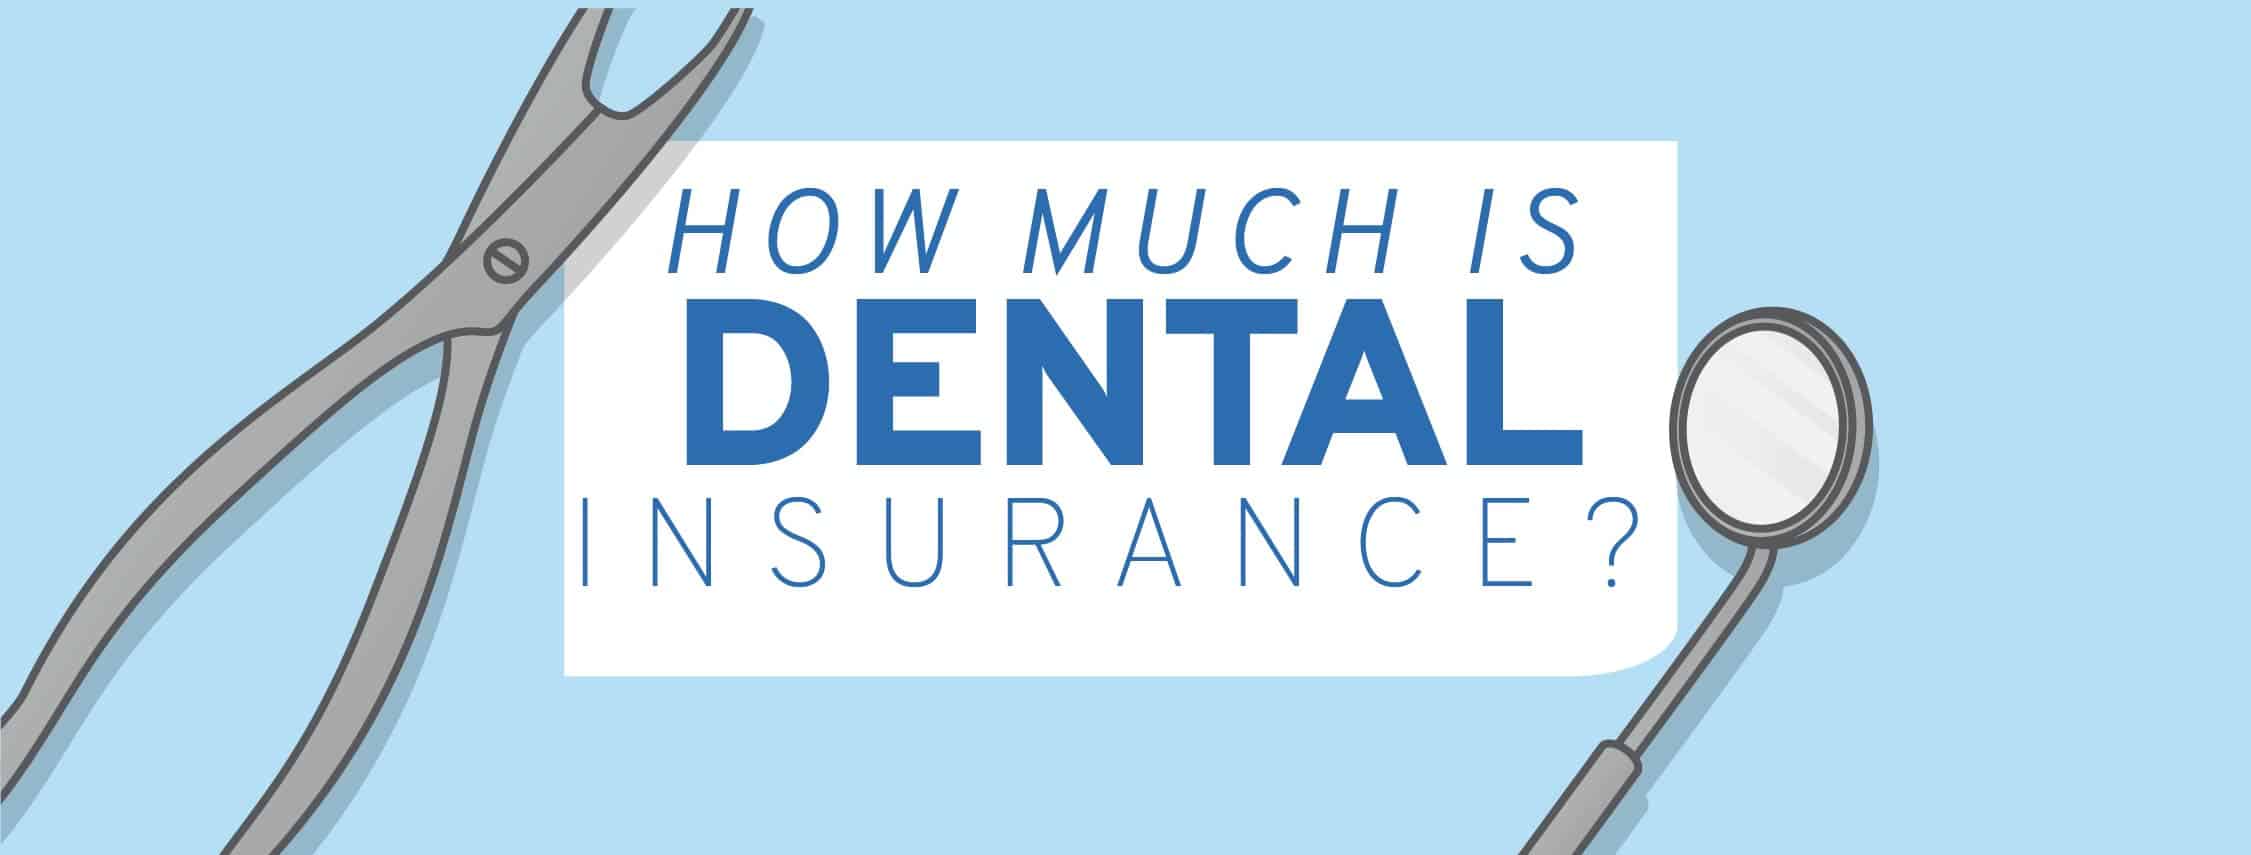 dental insurance cost